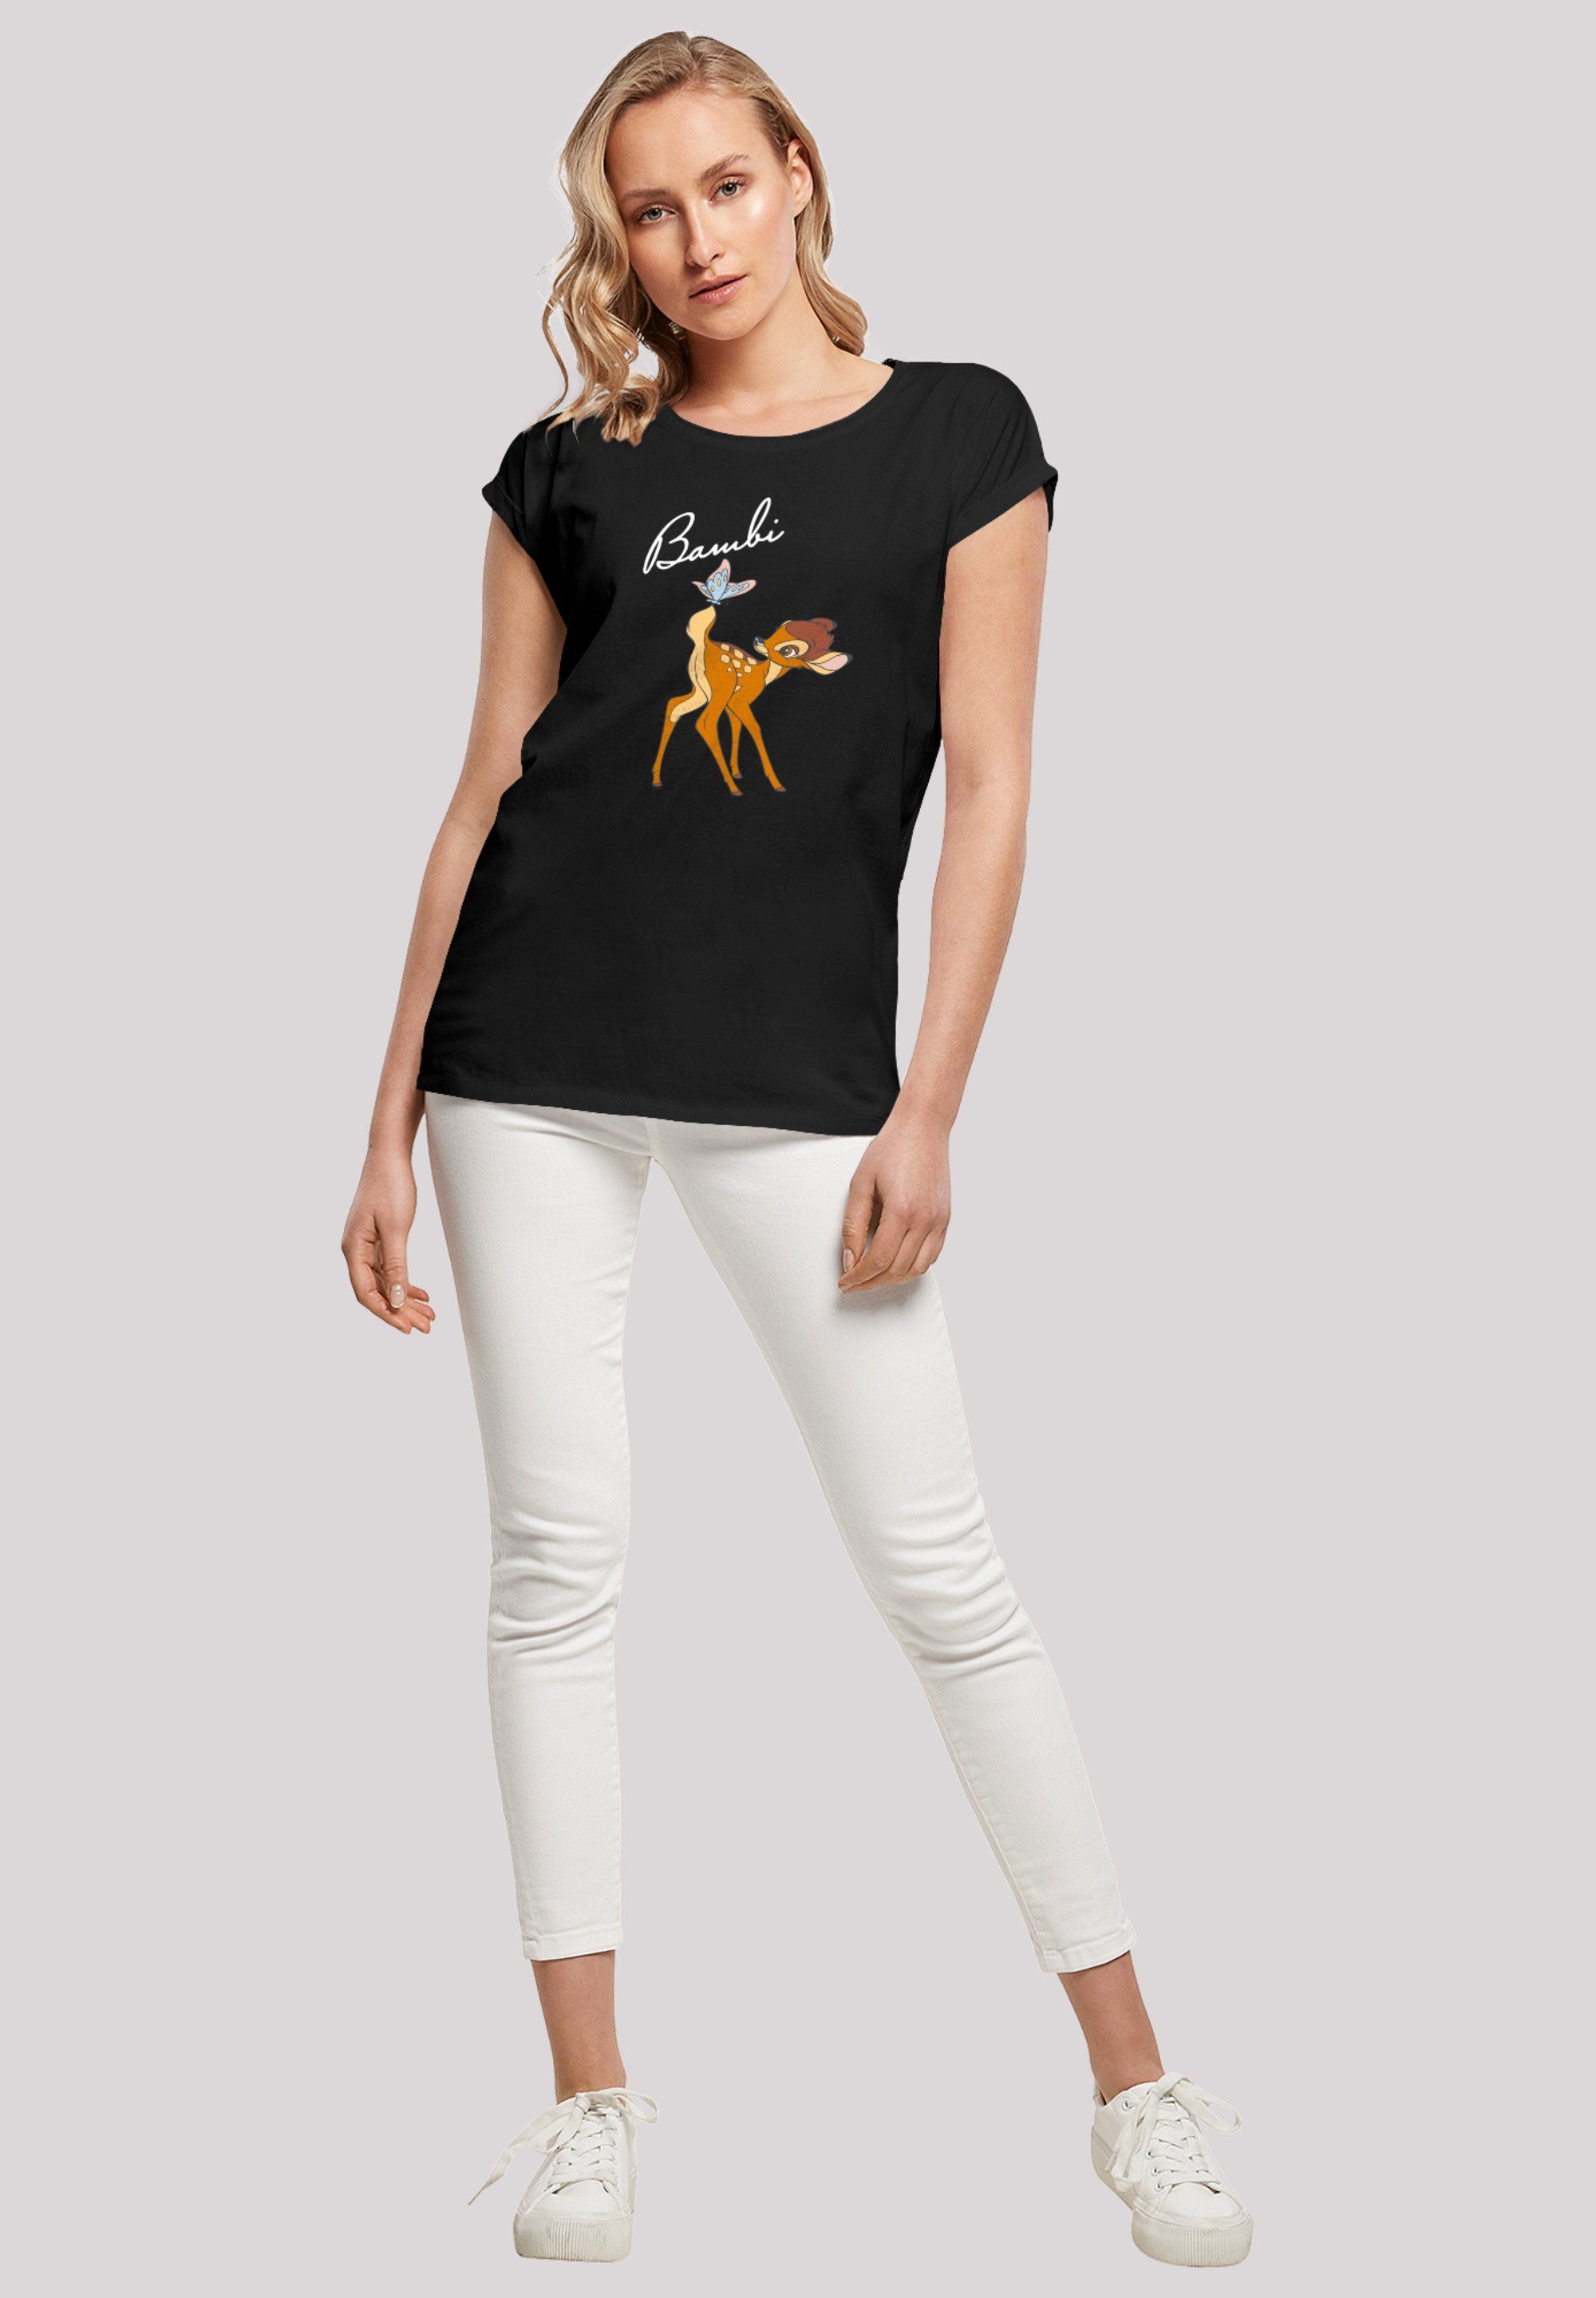 Bambi F4NT4STIC schwarz T-Shirt Schmetterling Print Disney Tail